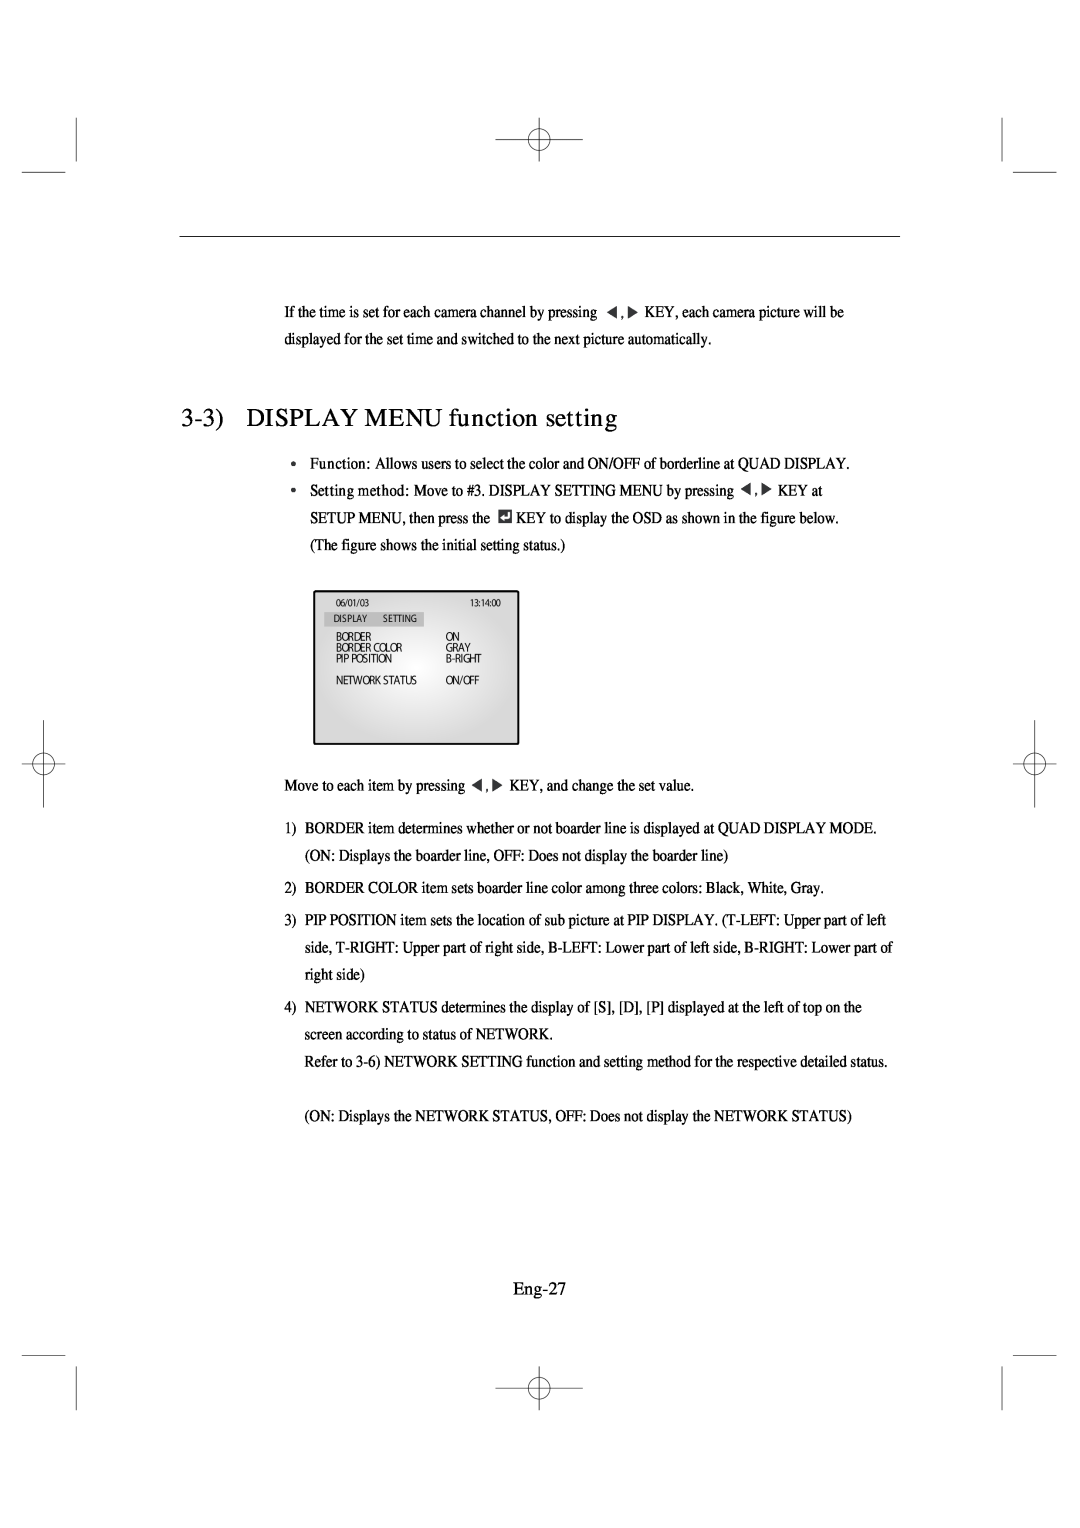 Samsung SSC17WEB manual 3-3DISPLAY MENU function setting, Eng-27 